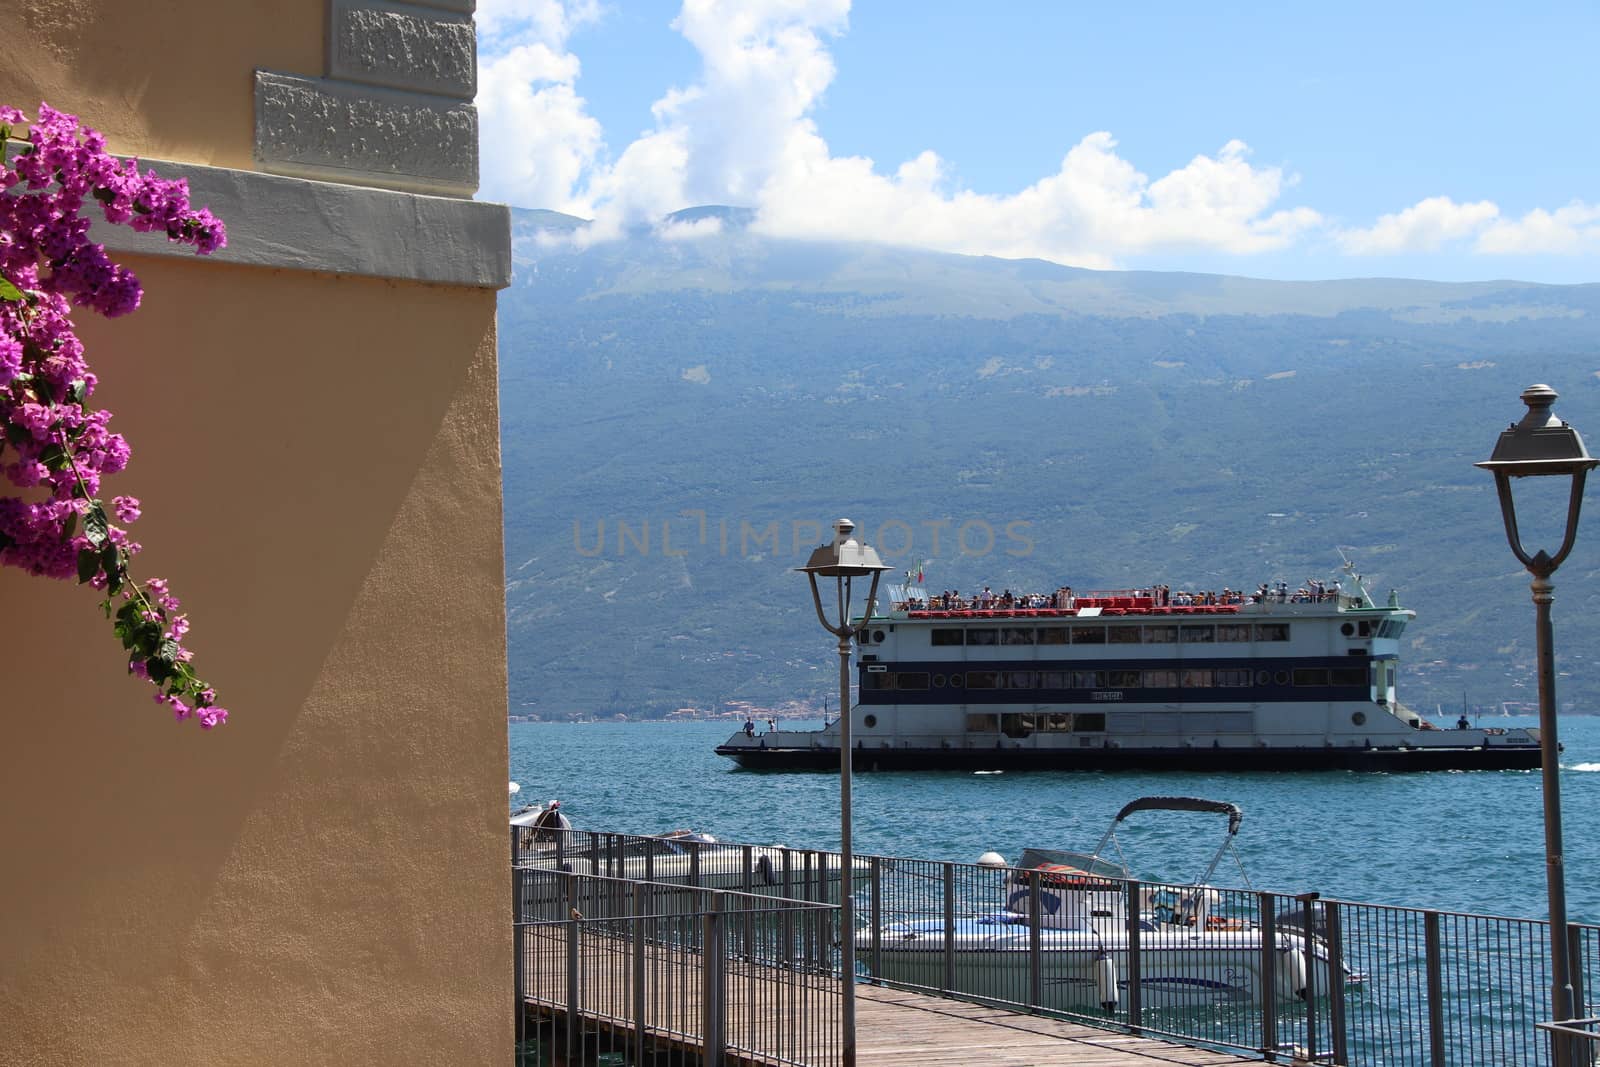 Lake Garda, Brescia,  Italy - 07/ 30/ 2020: An old paddle steamer boat on  Garda lake